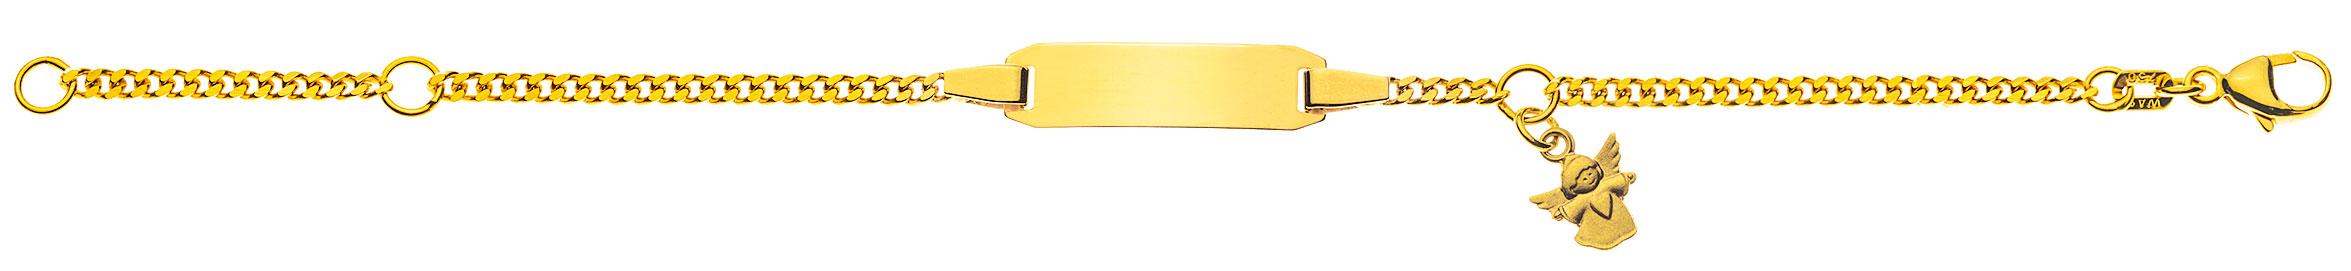 AURONOS Prestige ID bracelet 18k yellow gold curb chain diamond-plated 14cm